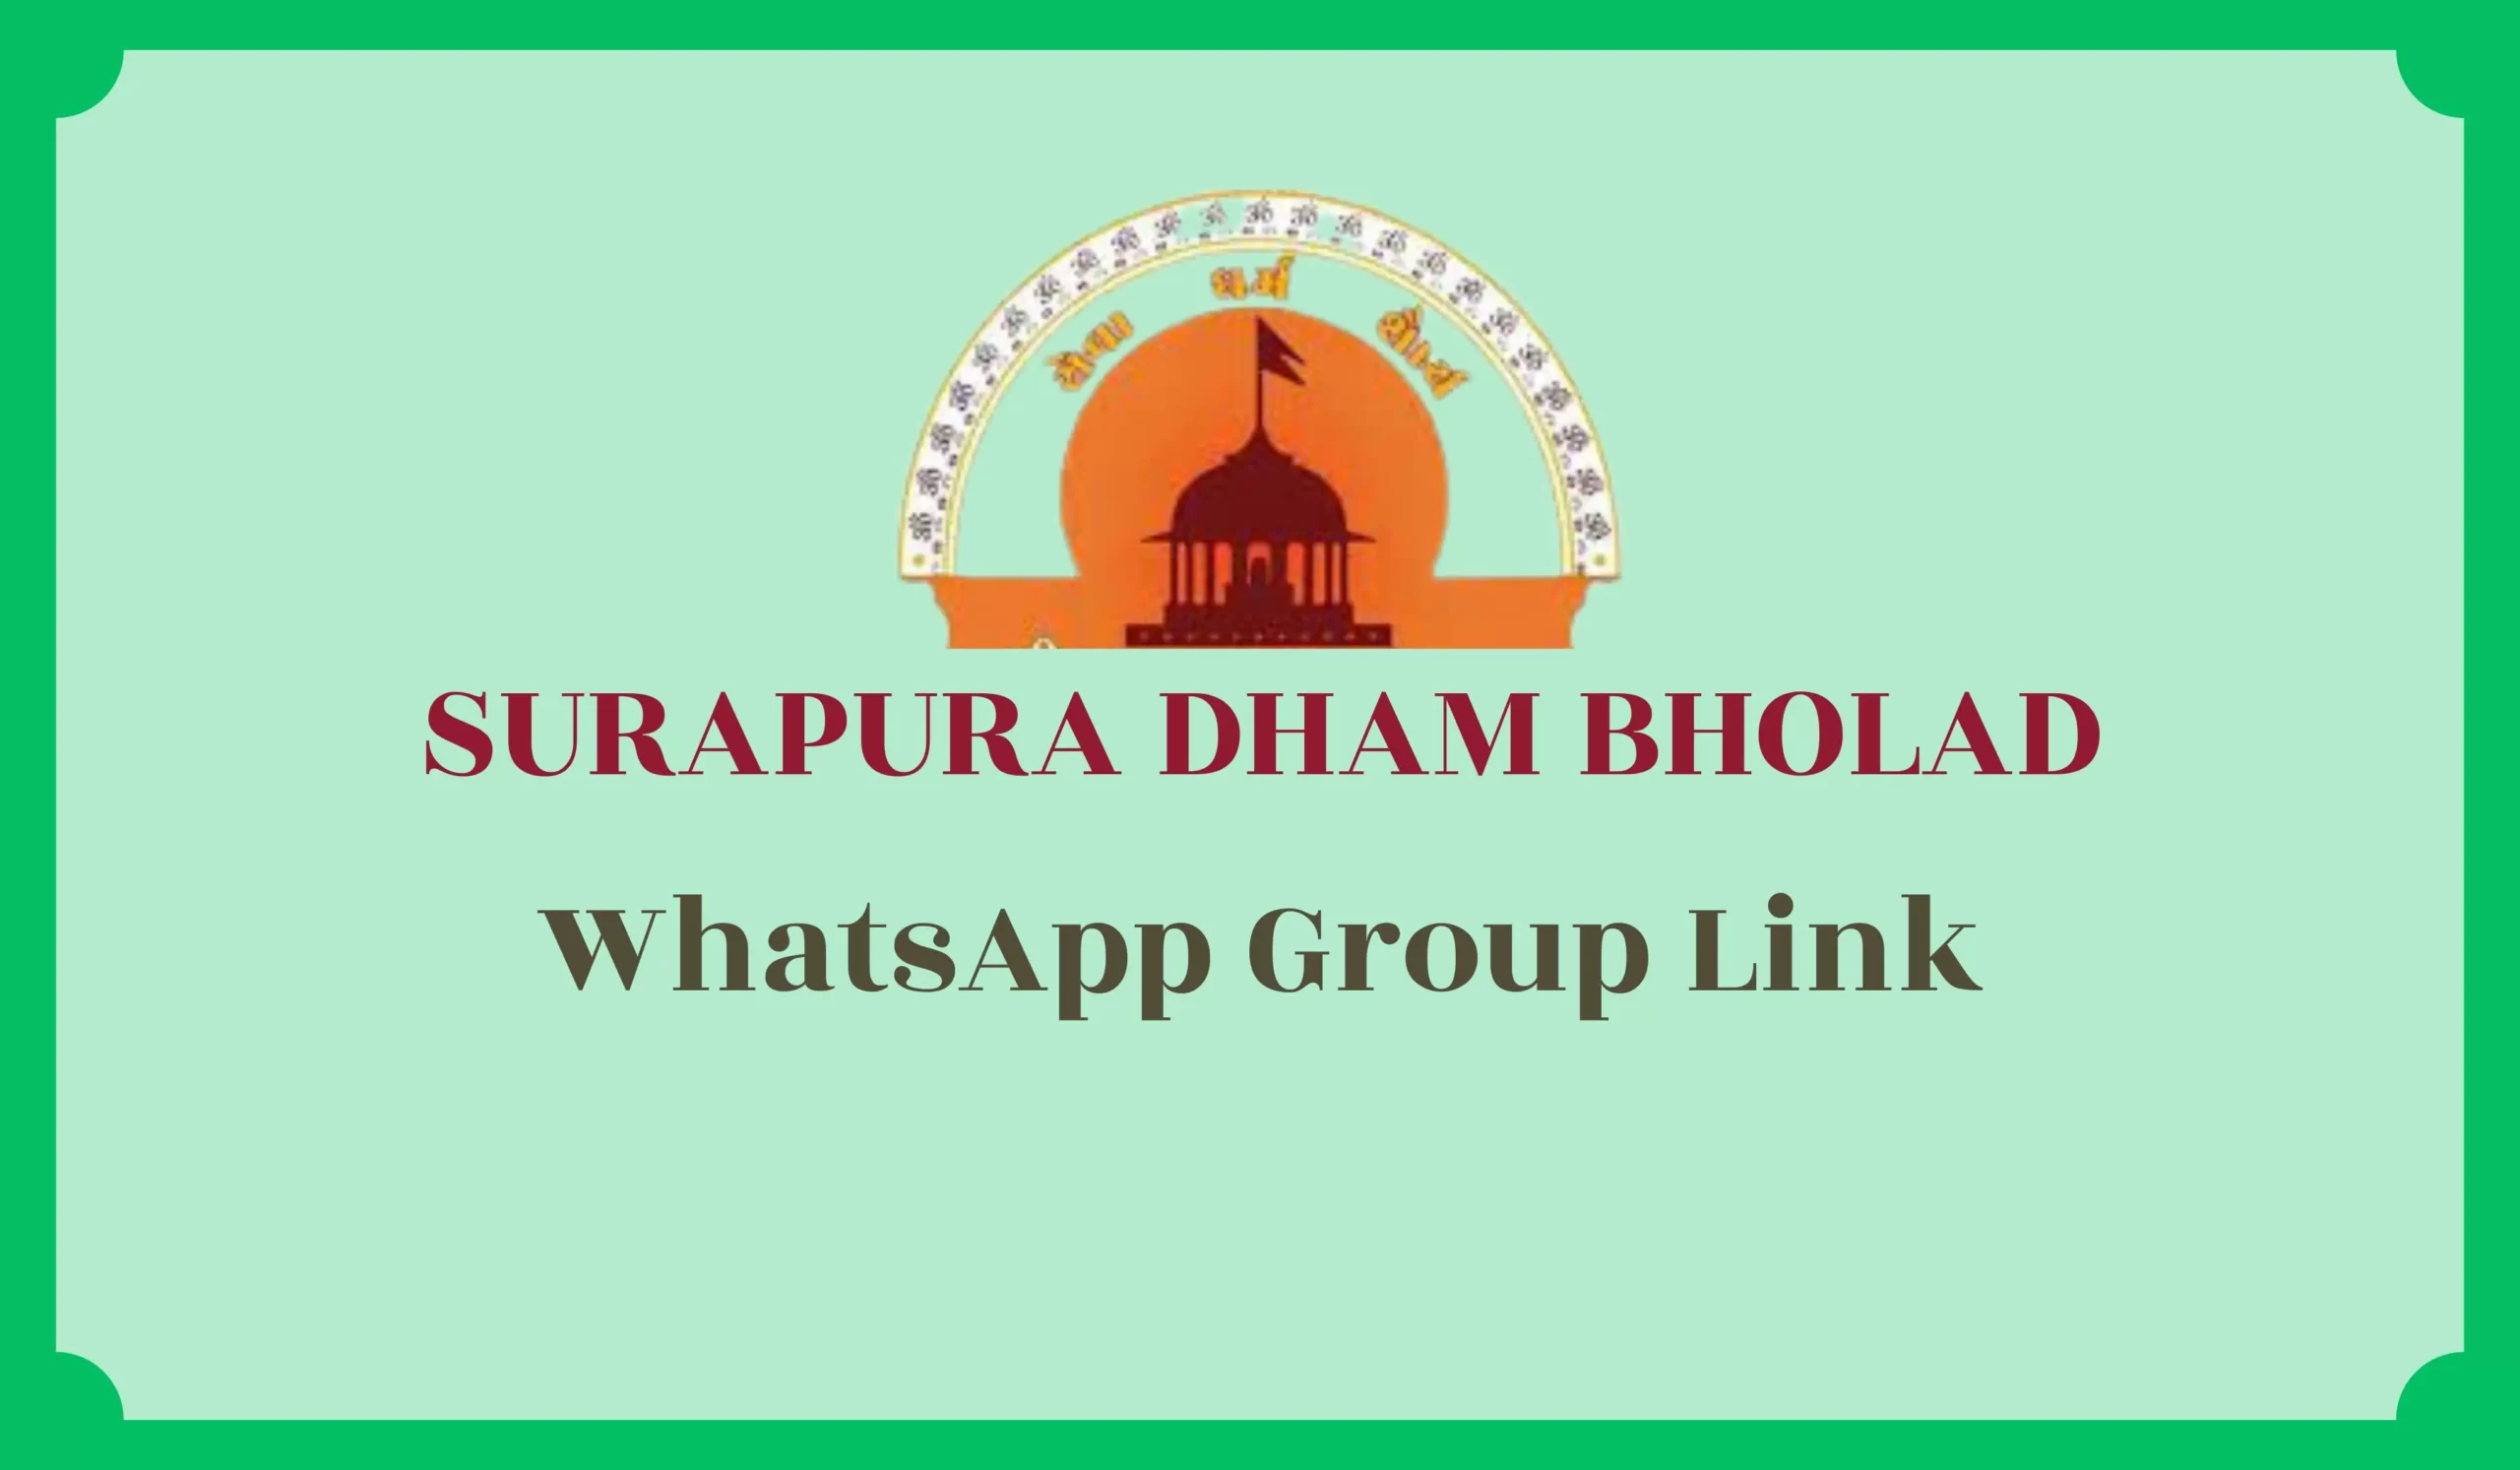 Surapura Dham Bholad WhatsApp Group Link